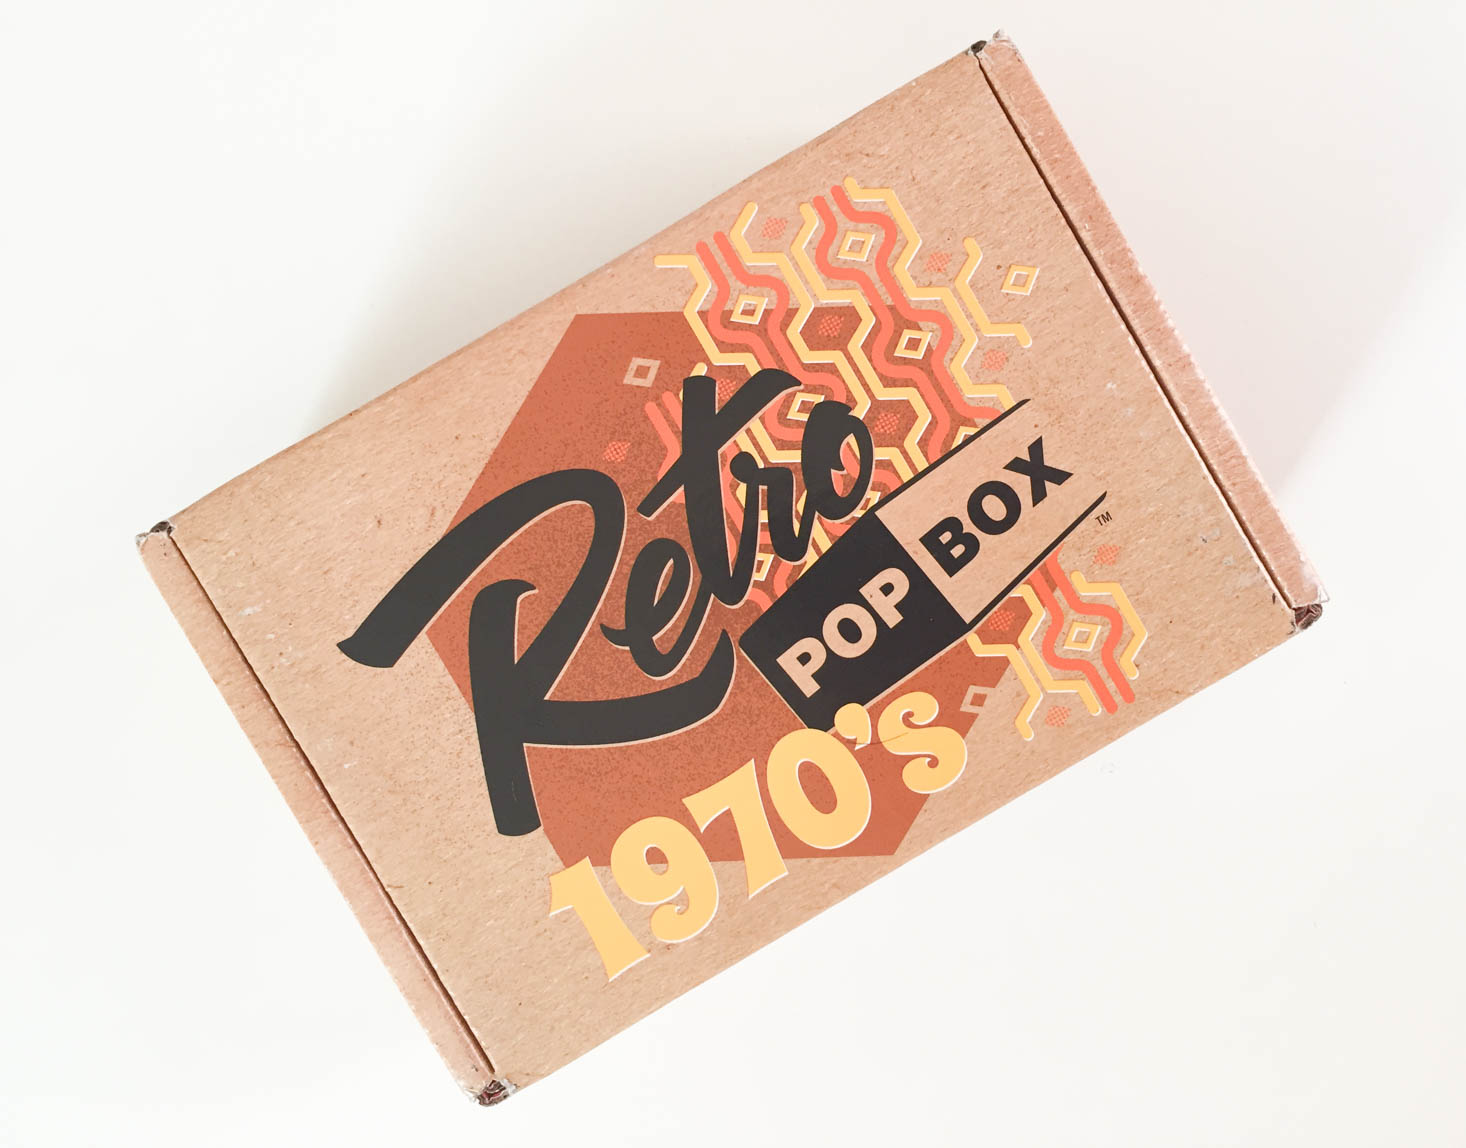 Retro-Pop-Box-1980s-January-2017-0001.jpg